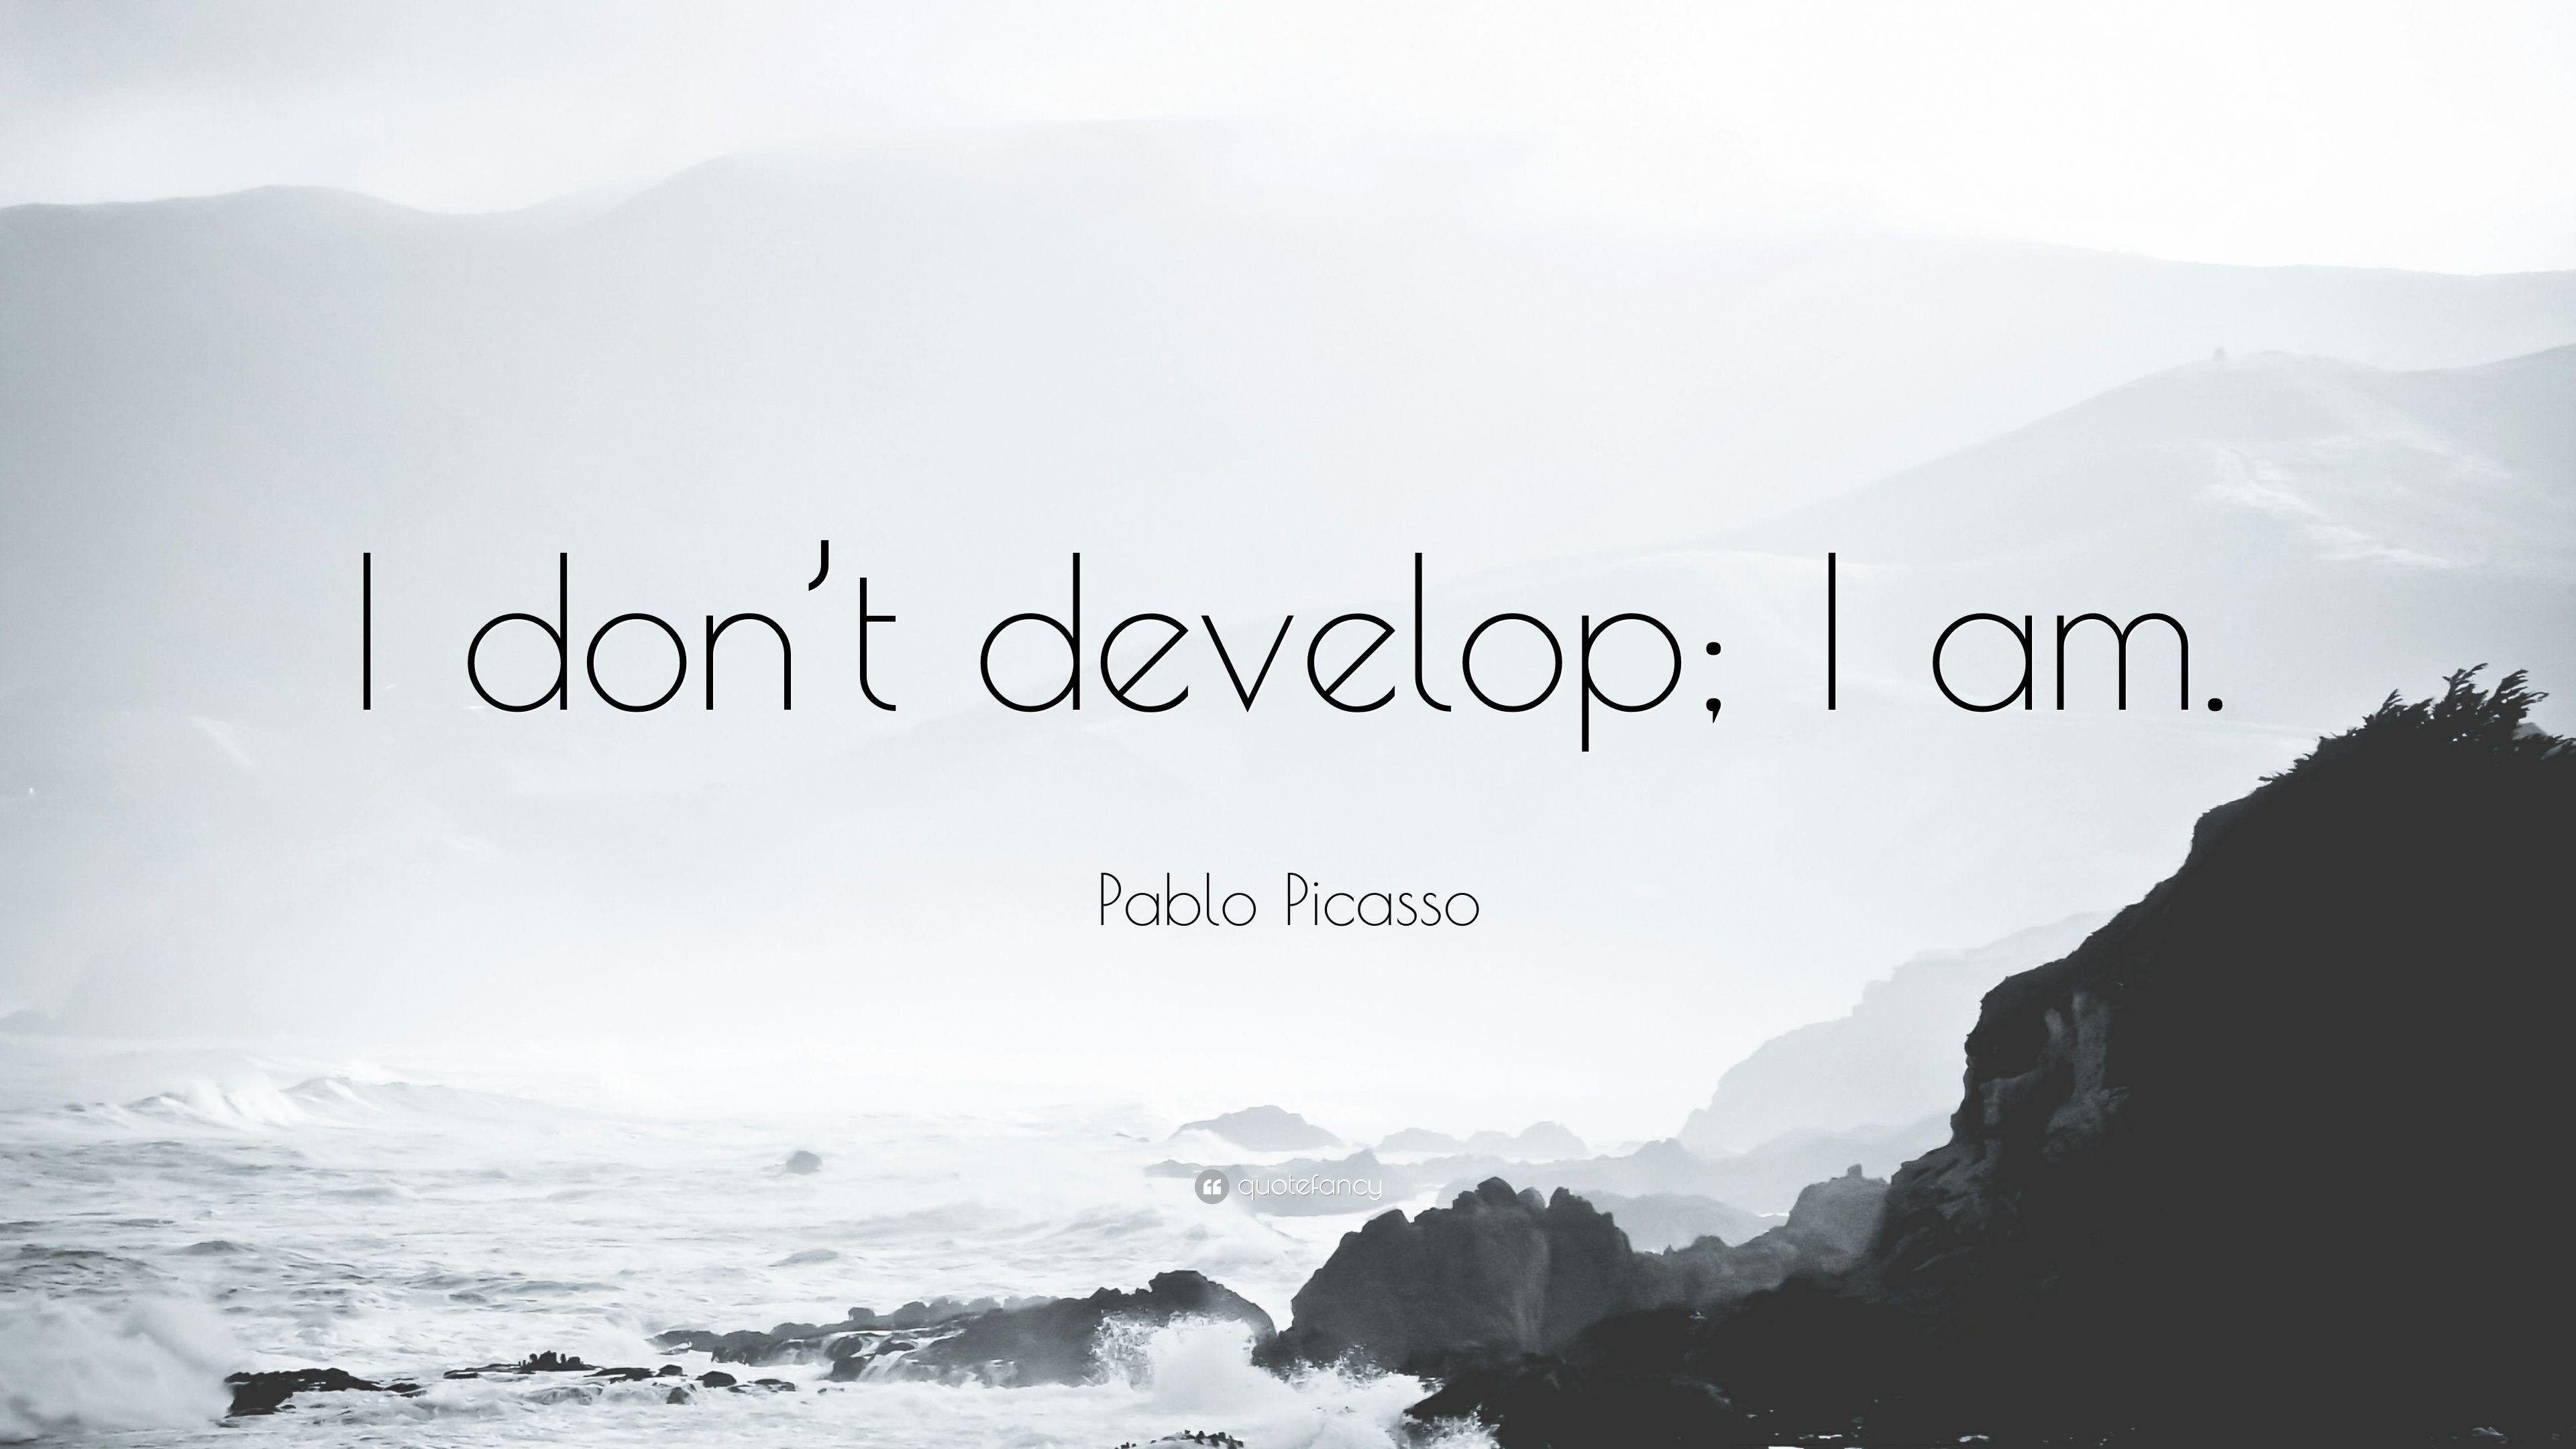 Pablo Picasso Quote: “I don't develop; I am.” 12 wallpaper